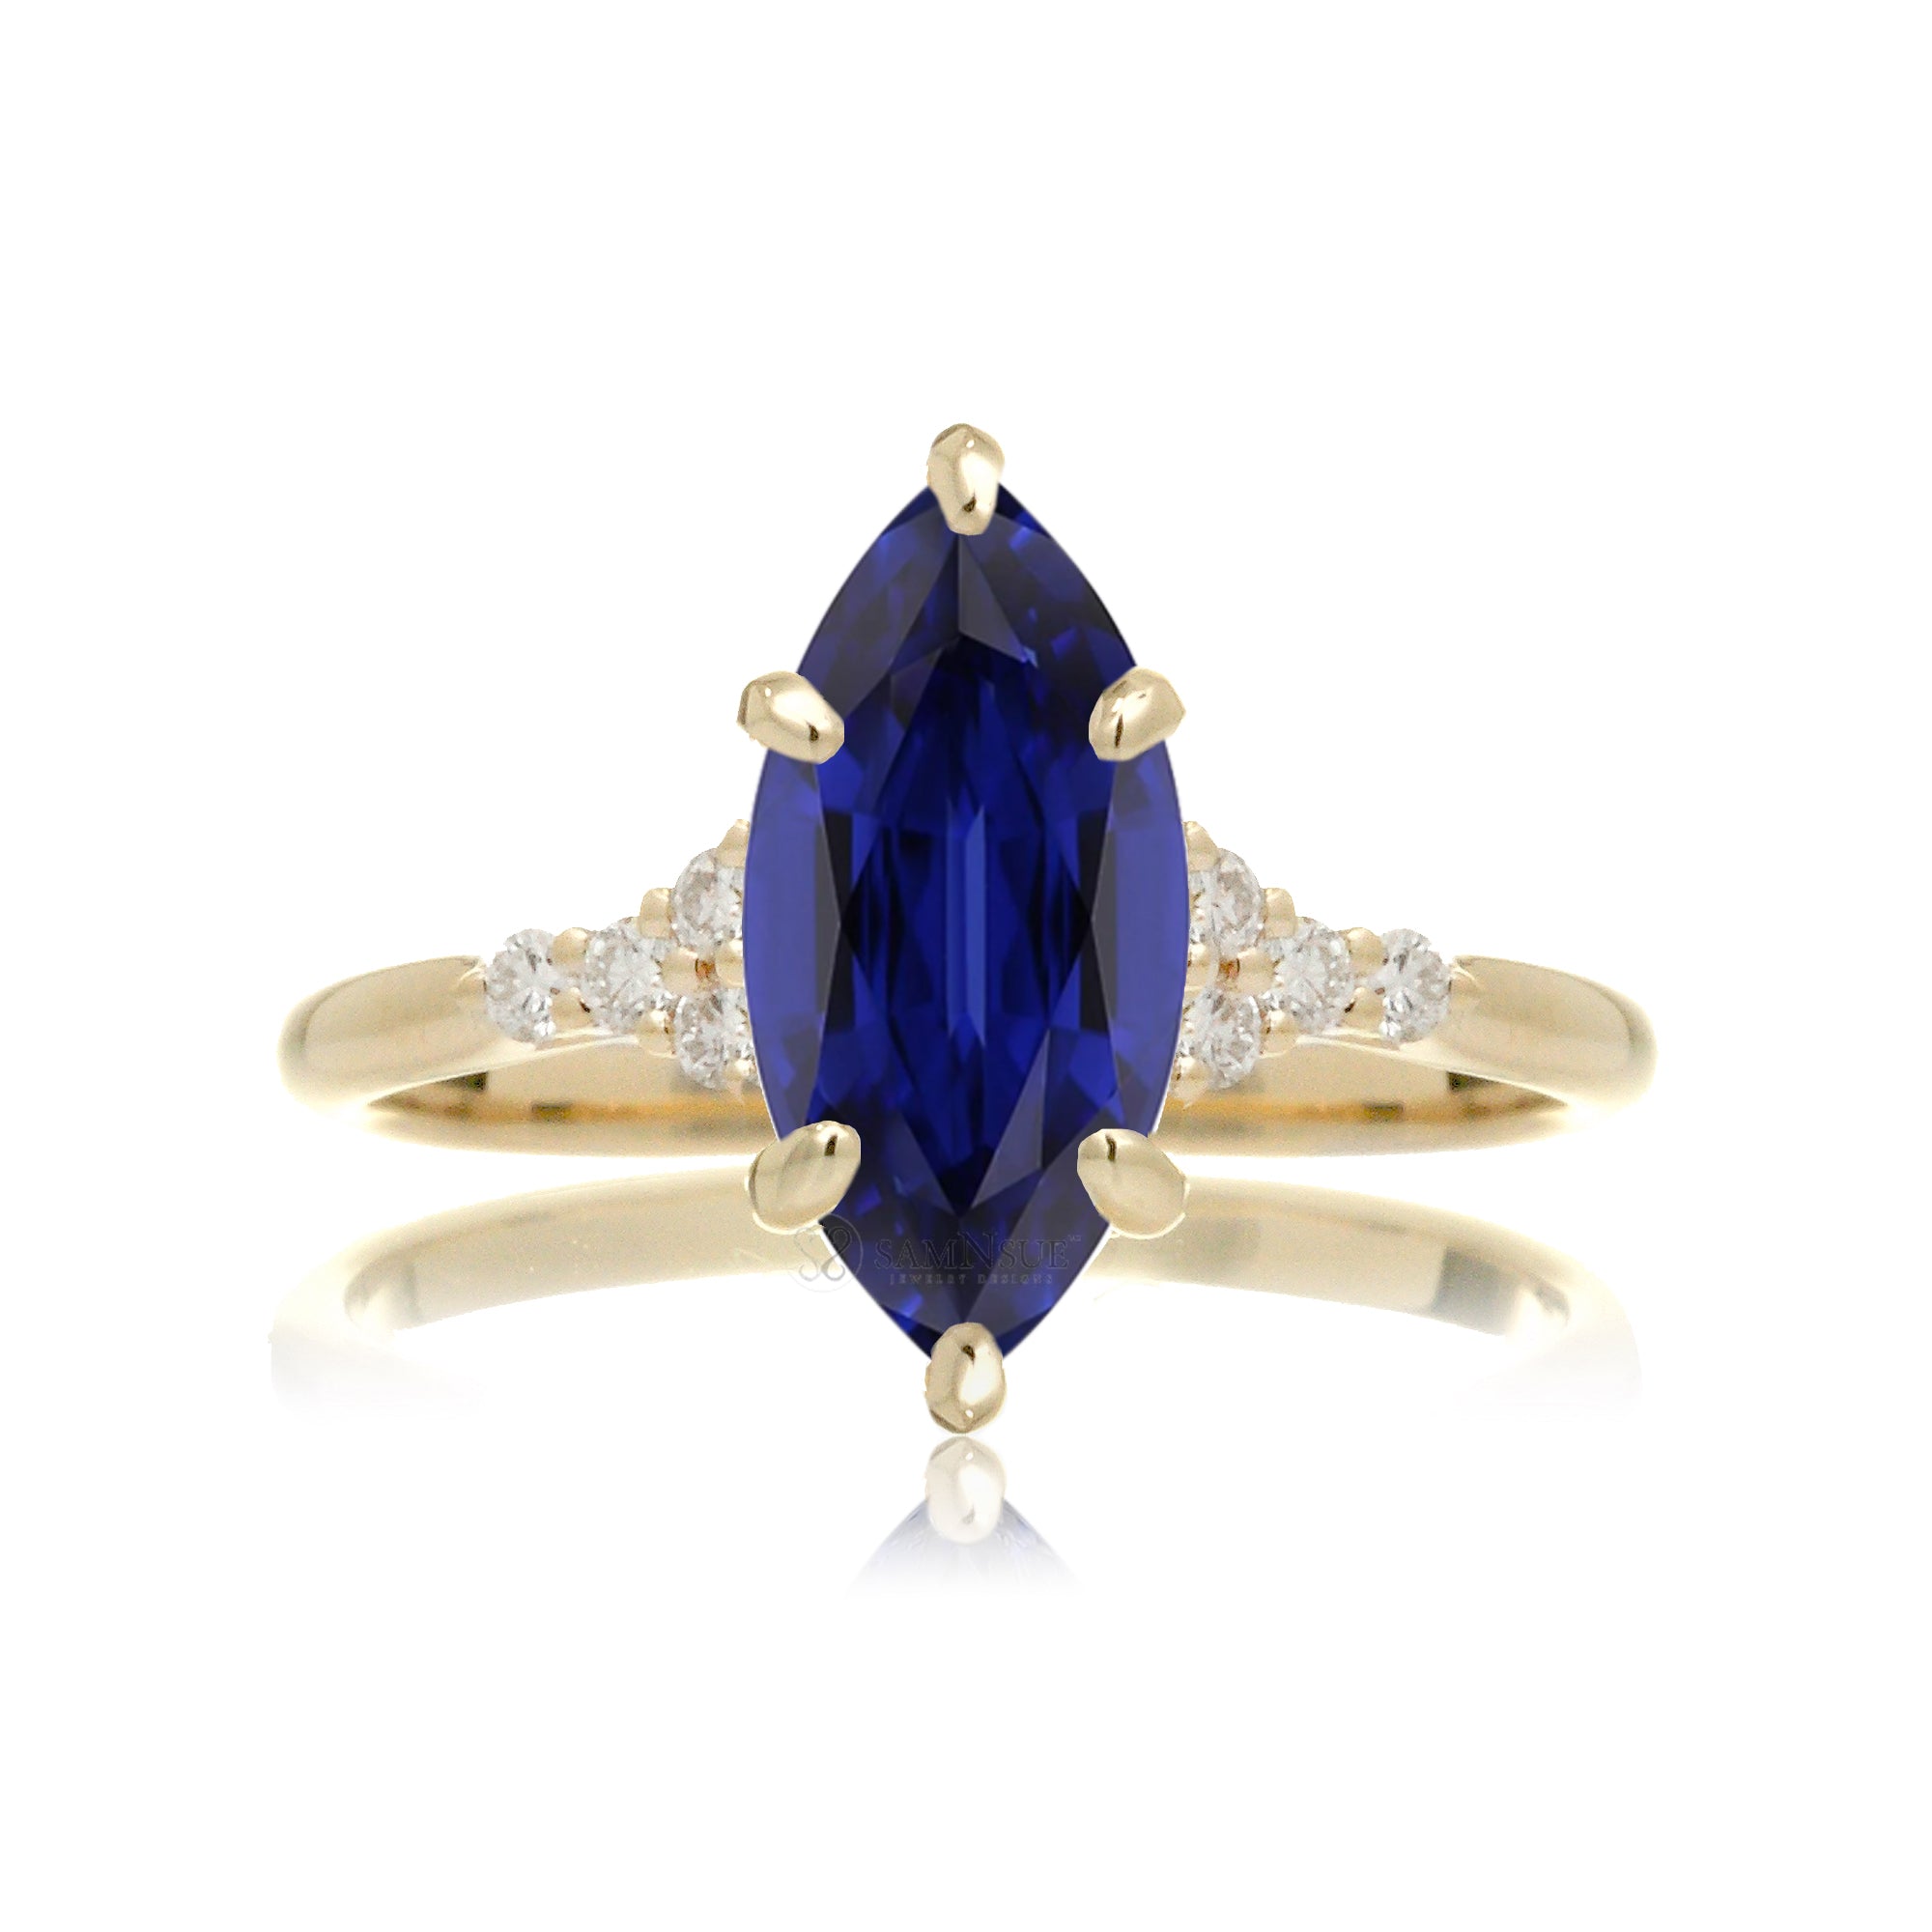 The Chloe Marquise Cut Blue Sapphire Ring